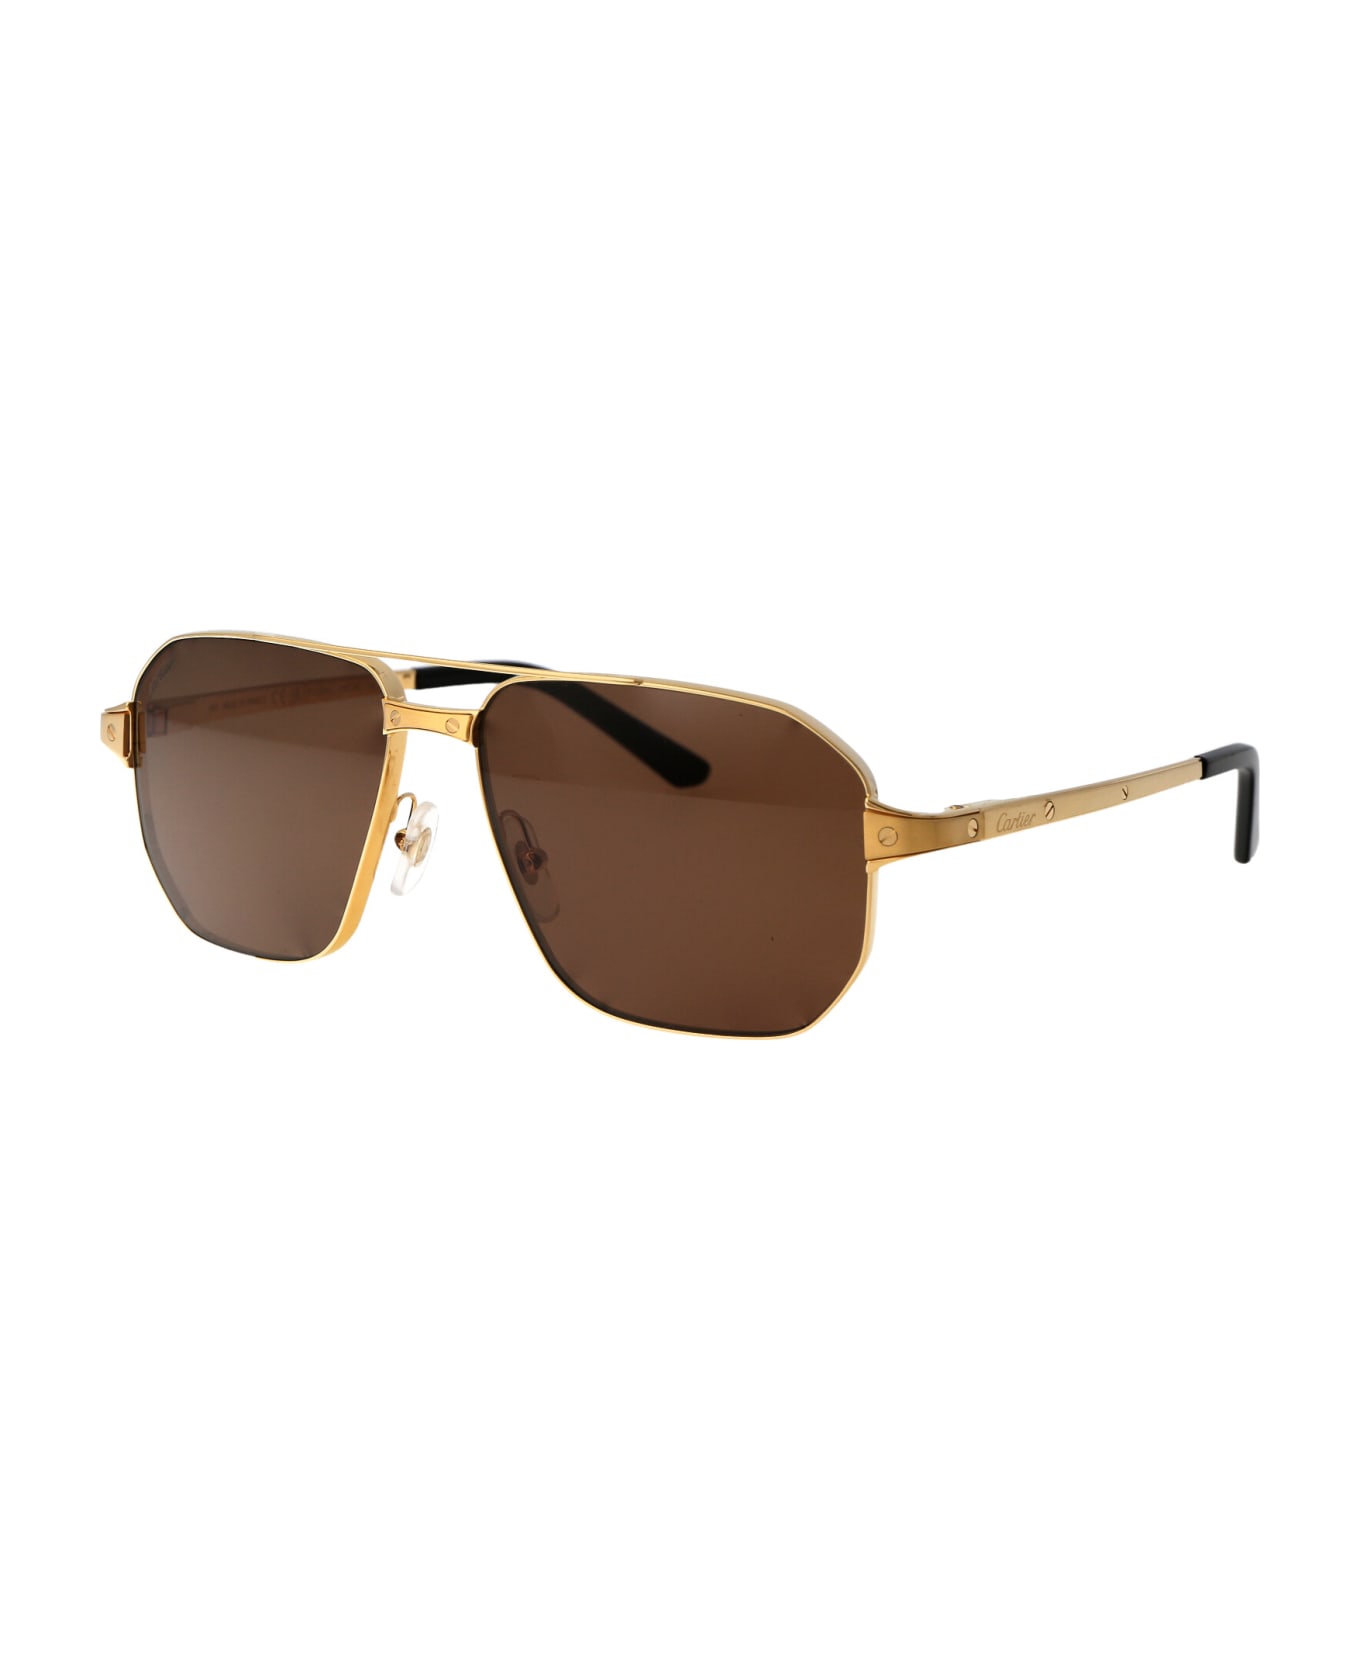 Cartier Eyewear Ct0424s Sunglasses - 003 GOLD GOLD BROWN サングラス